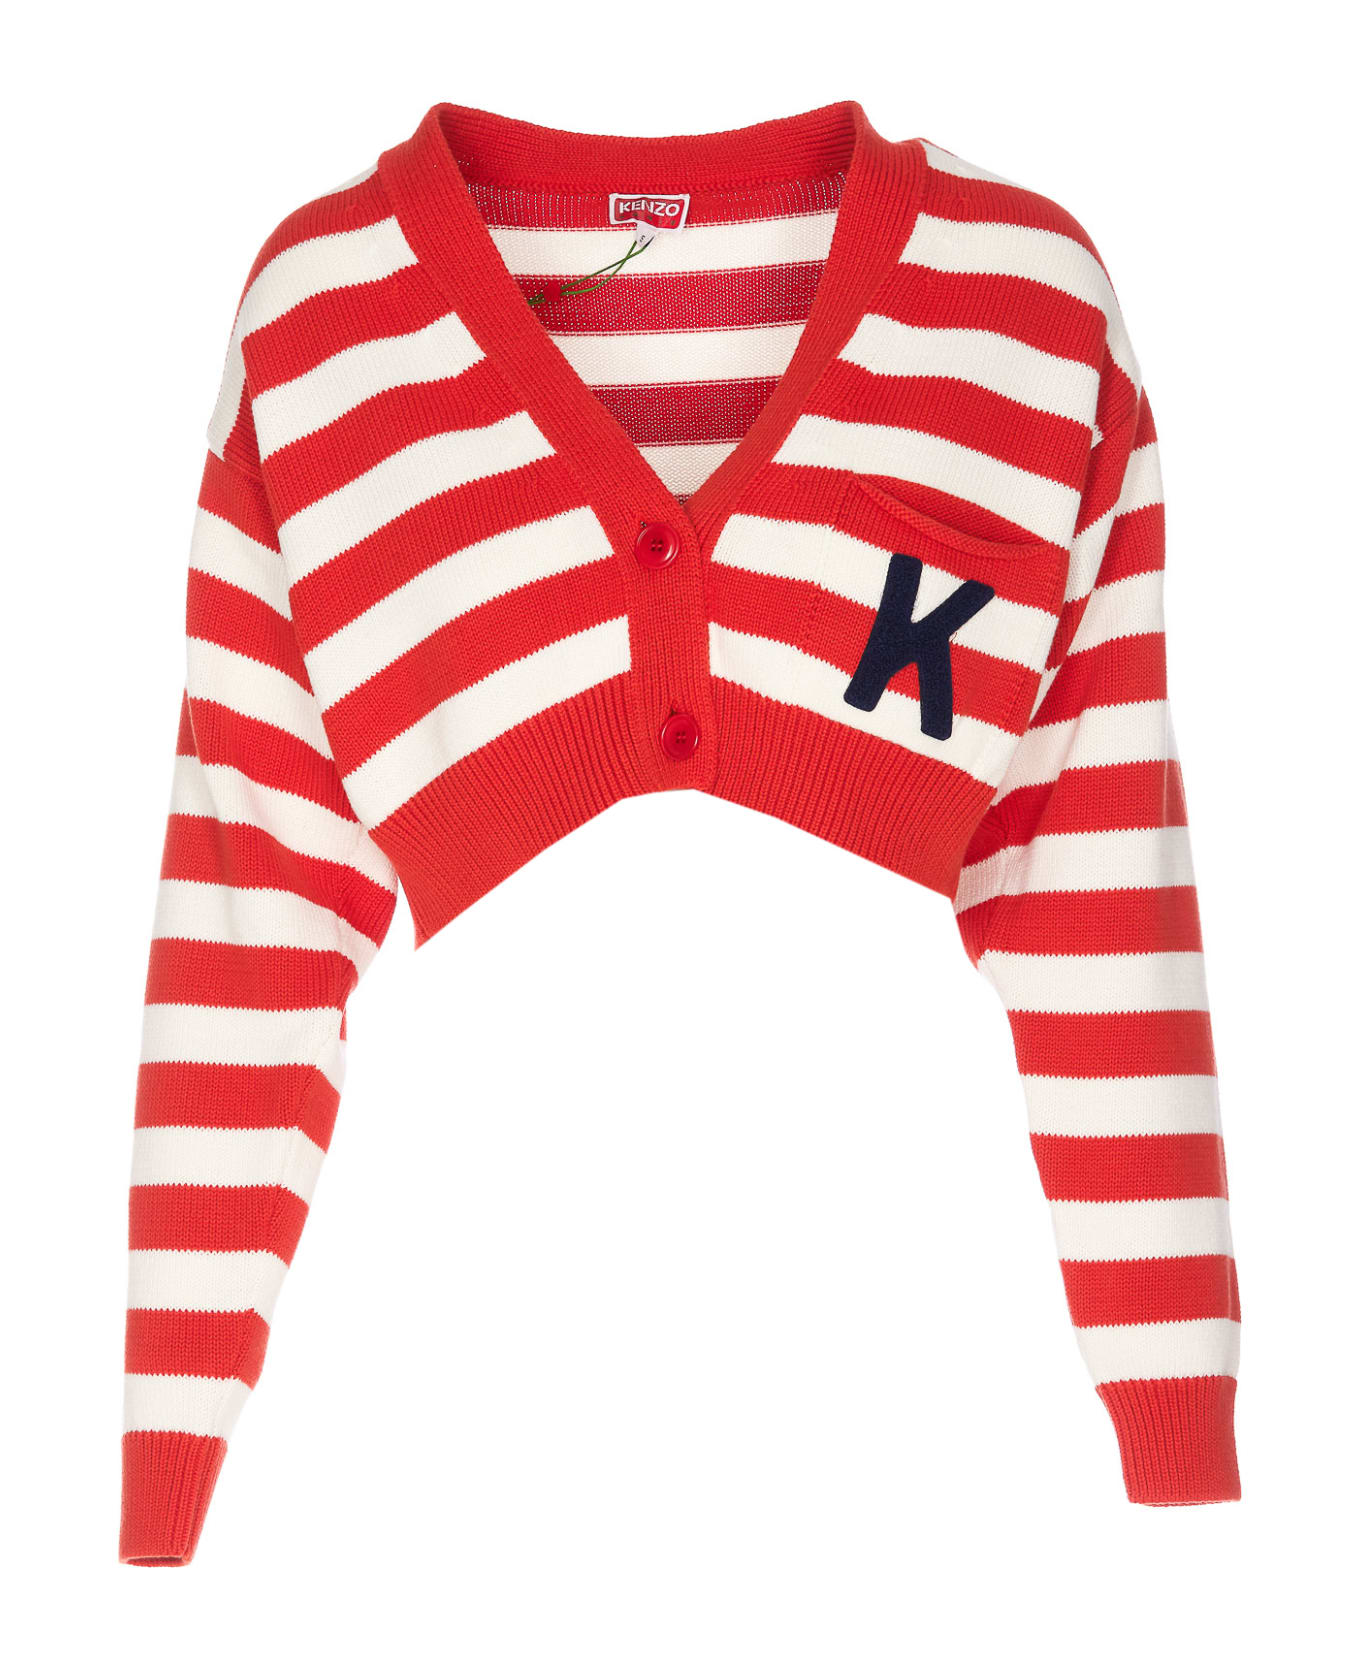 Kenzo Nautical Striped Cardigan - ORANGE/WHITE